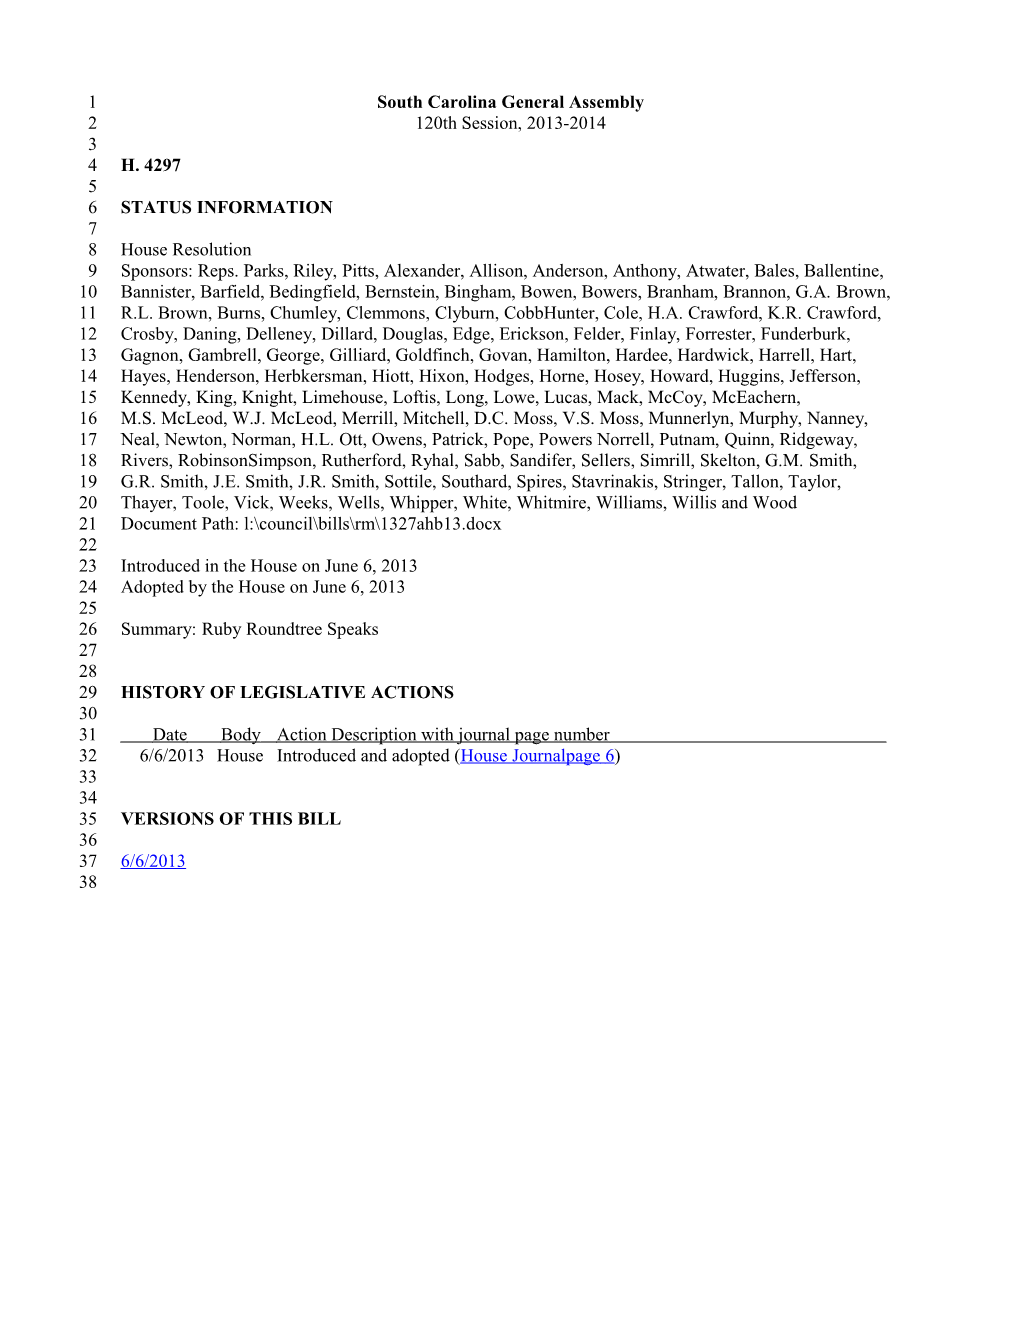 2013-2014 Bill 4297: Ruby Roundtree Speaks - South Carolina Legislature Online